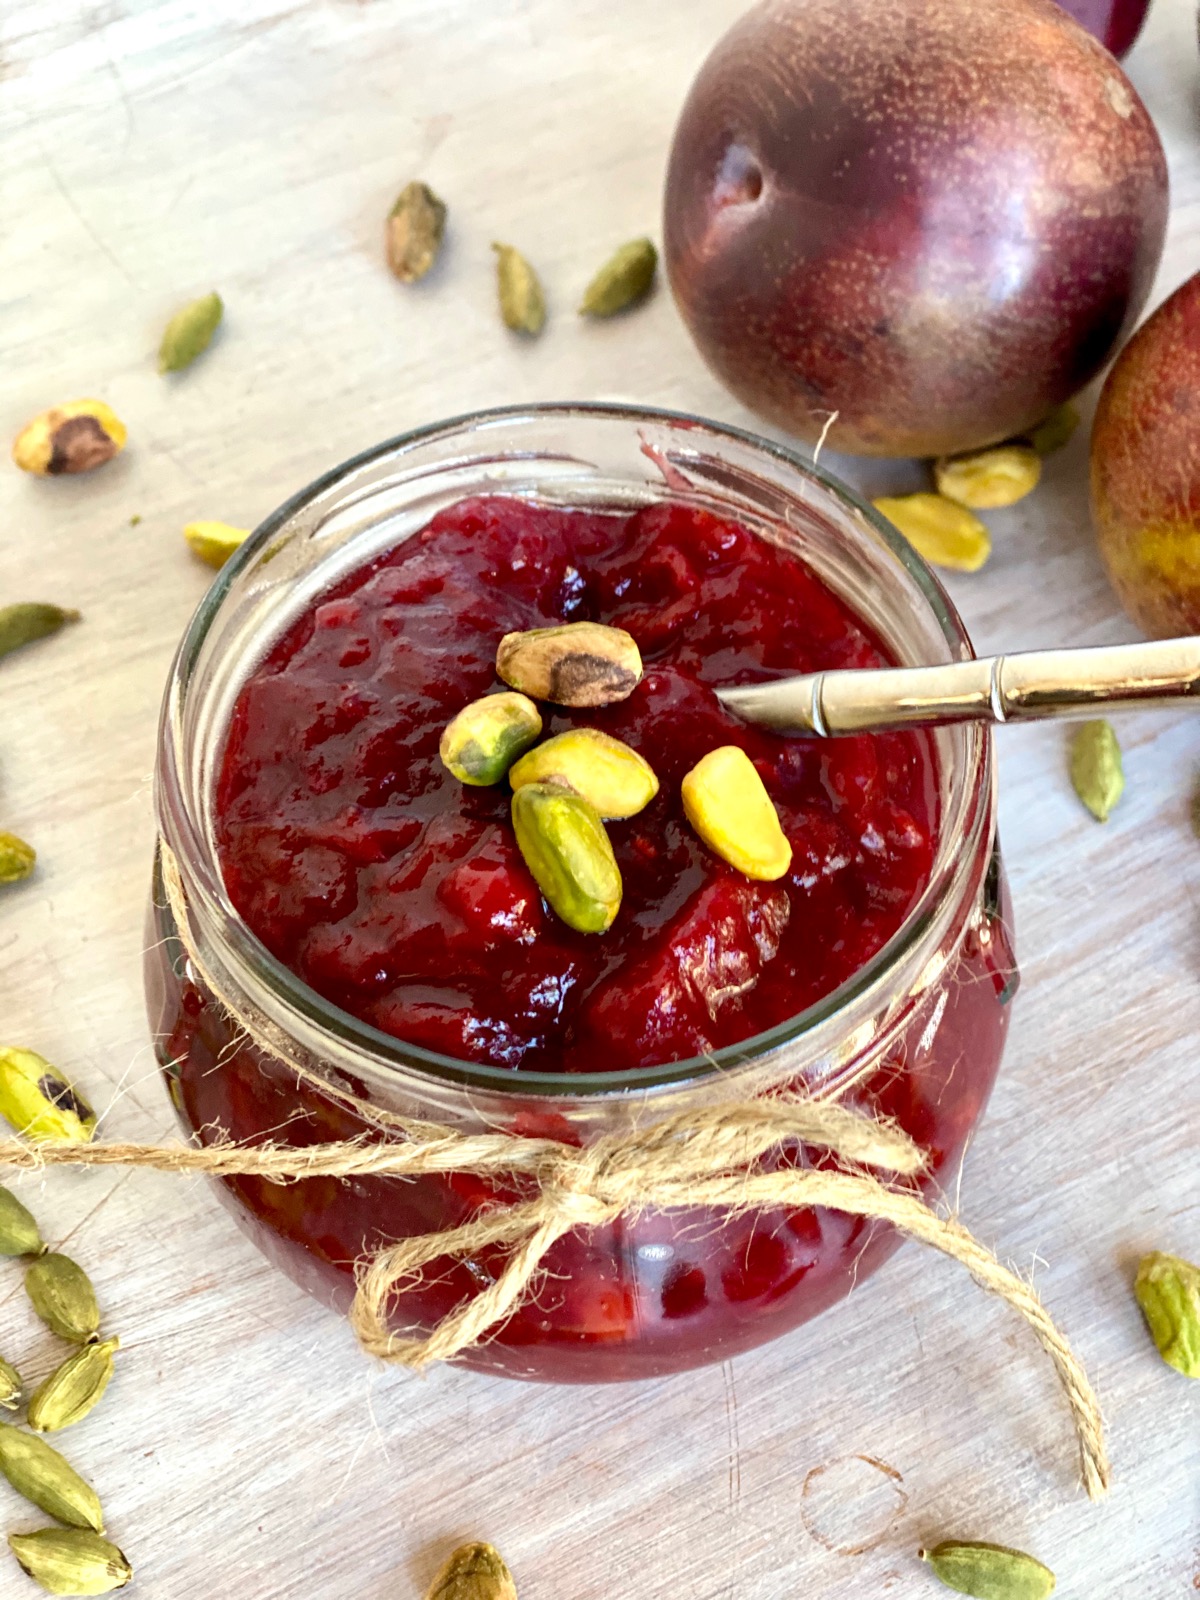 https://ovenhug.com/wp-content/uploads/2019/06/Fresh-Red-Plum-Compote-in-a-jam-jar-with-pistachio-garnish.jpg